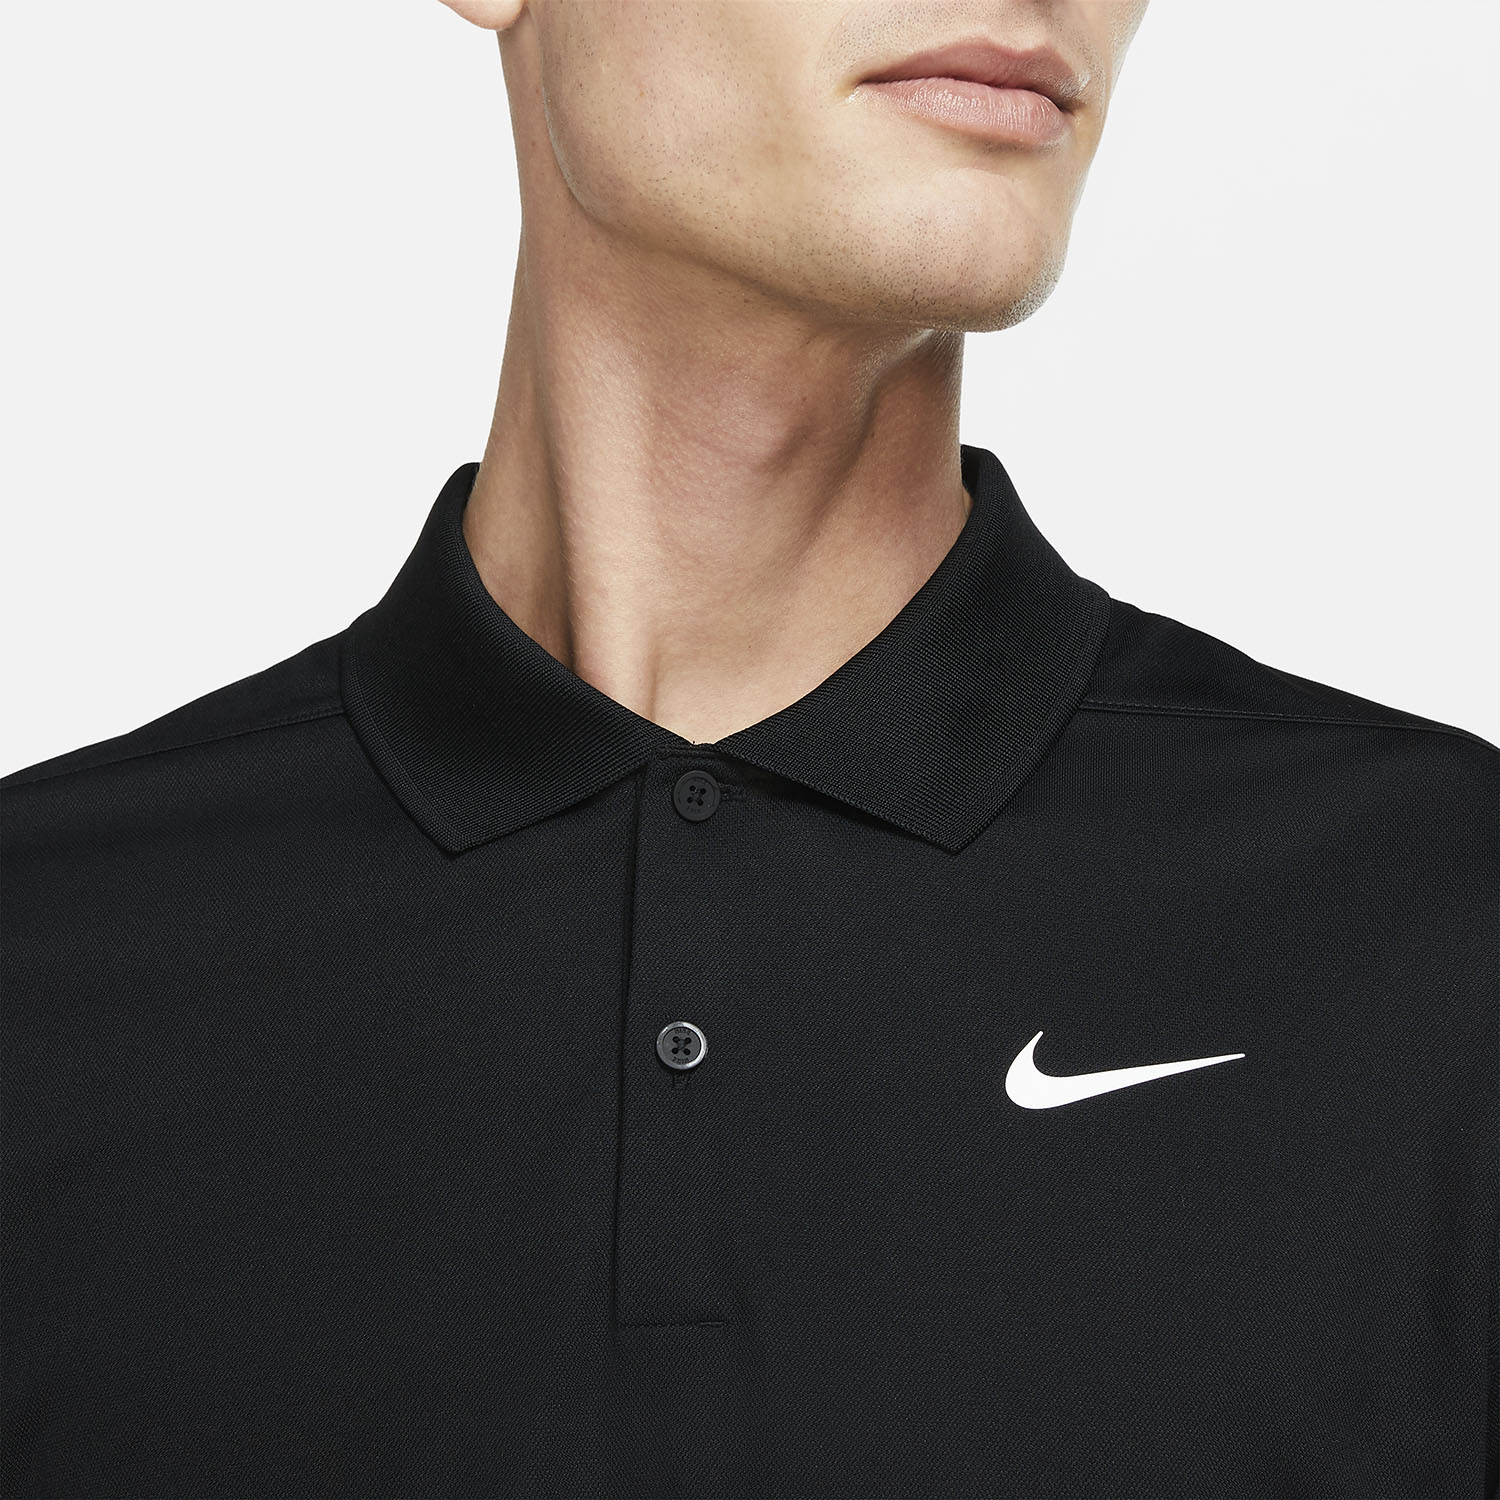 Nike Dri-FIT Classic Men's Tennis Polo - Black/White